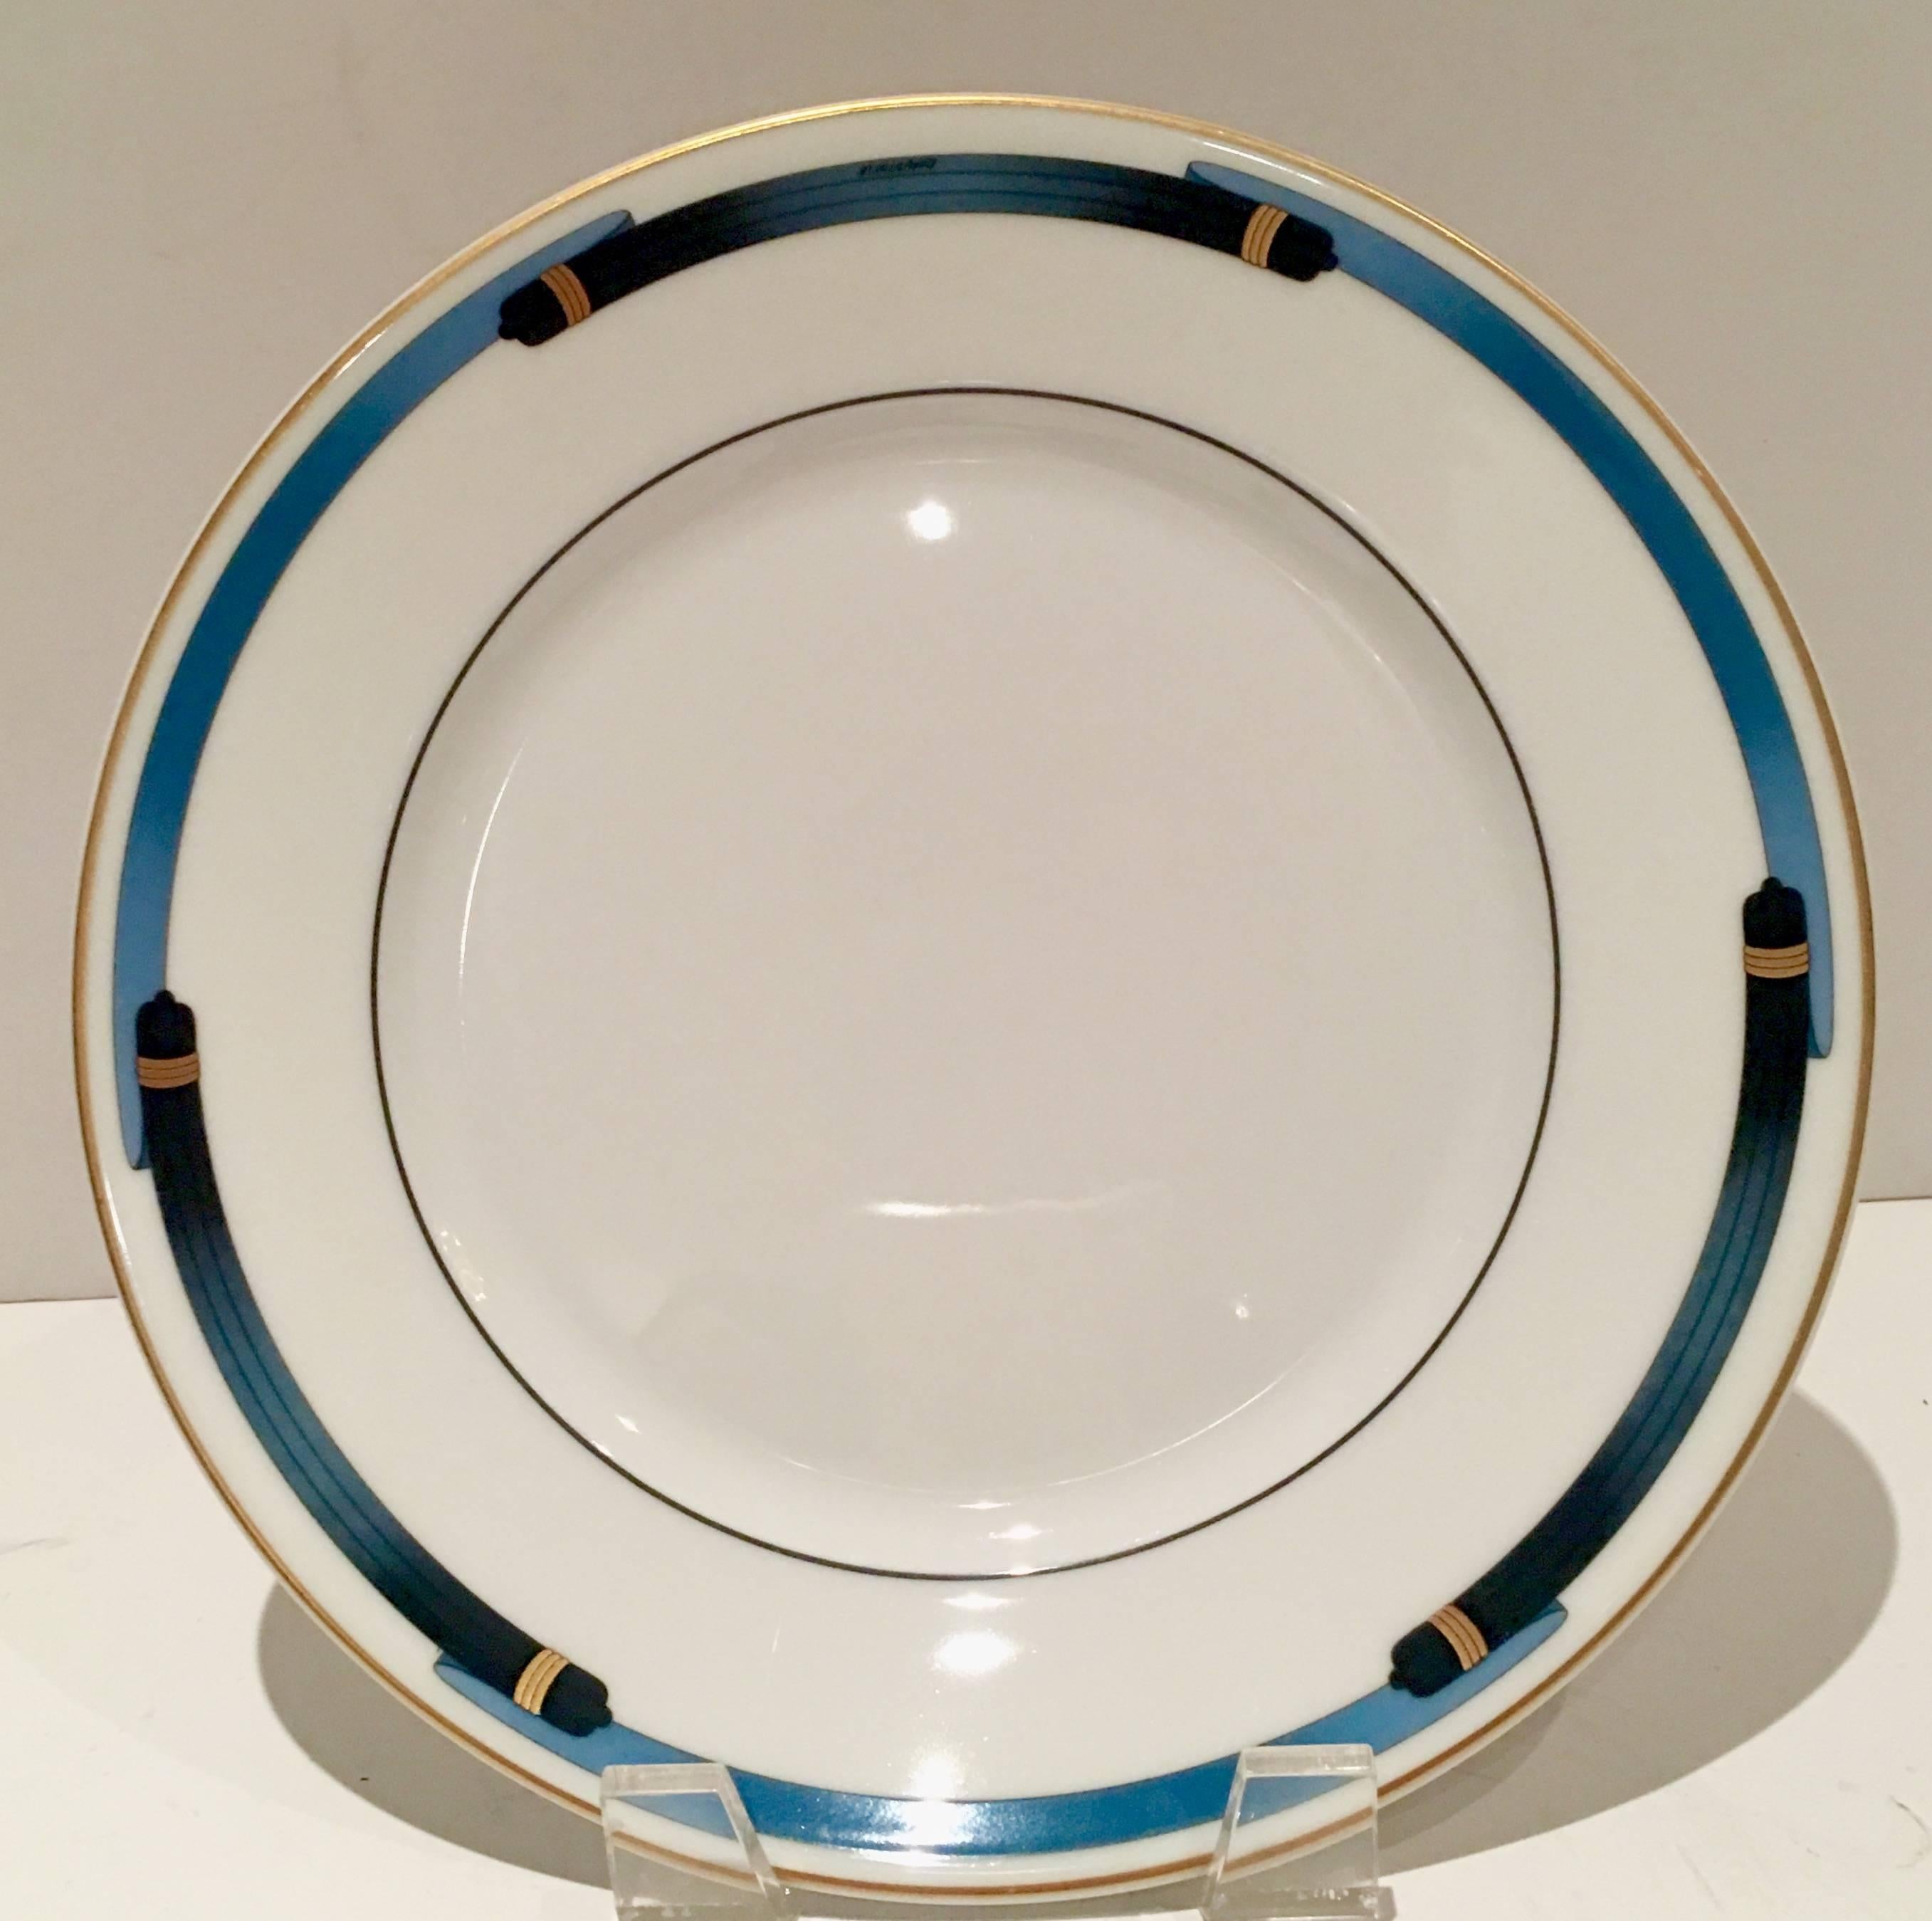 Extremely Rare 1990'S Art Deco design "Iriana Bleu" porcelain -Limoge dinnerware set of 18-pieces.. The 18-piece set includes four dinner plates 11" diameter, four salad/dessert plates 8.75" diameter, three rim soup bowls